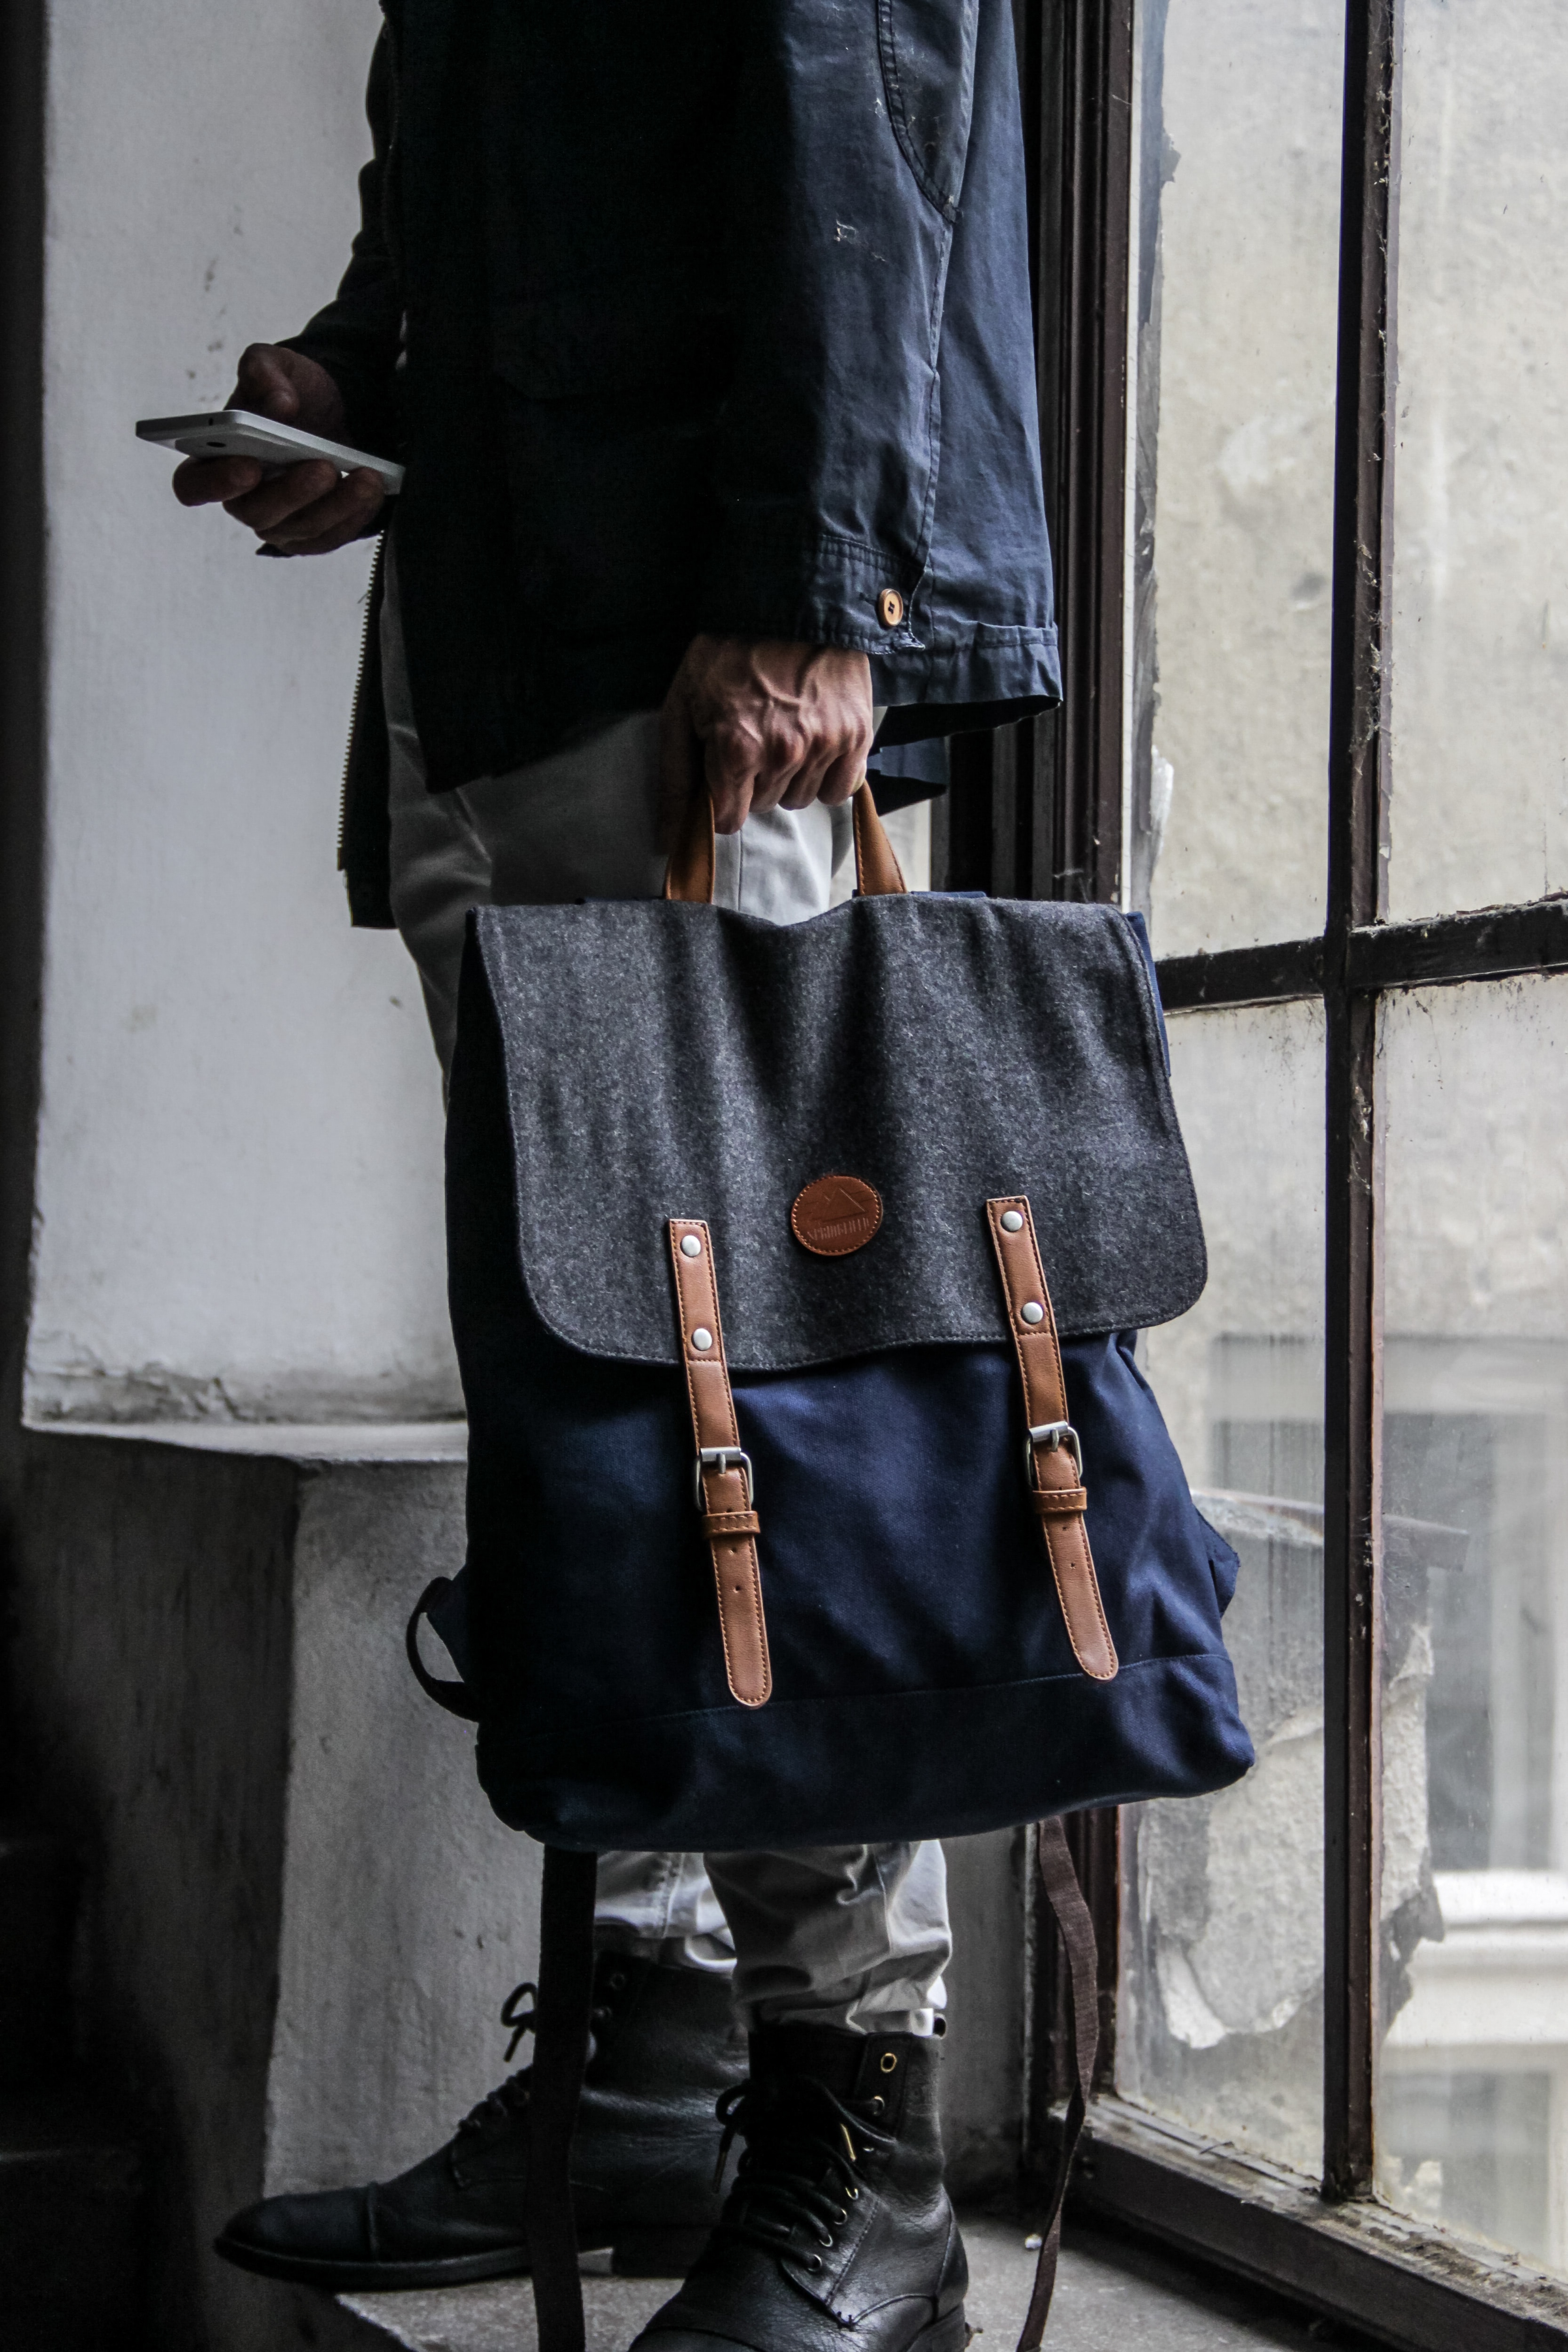 miscellanea, miscellaneous, window, man, style, backpack, rucksack, fashion